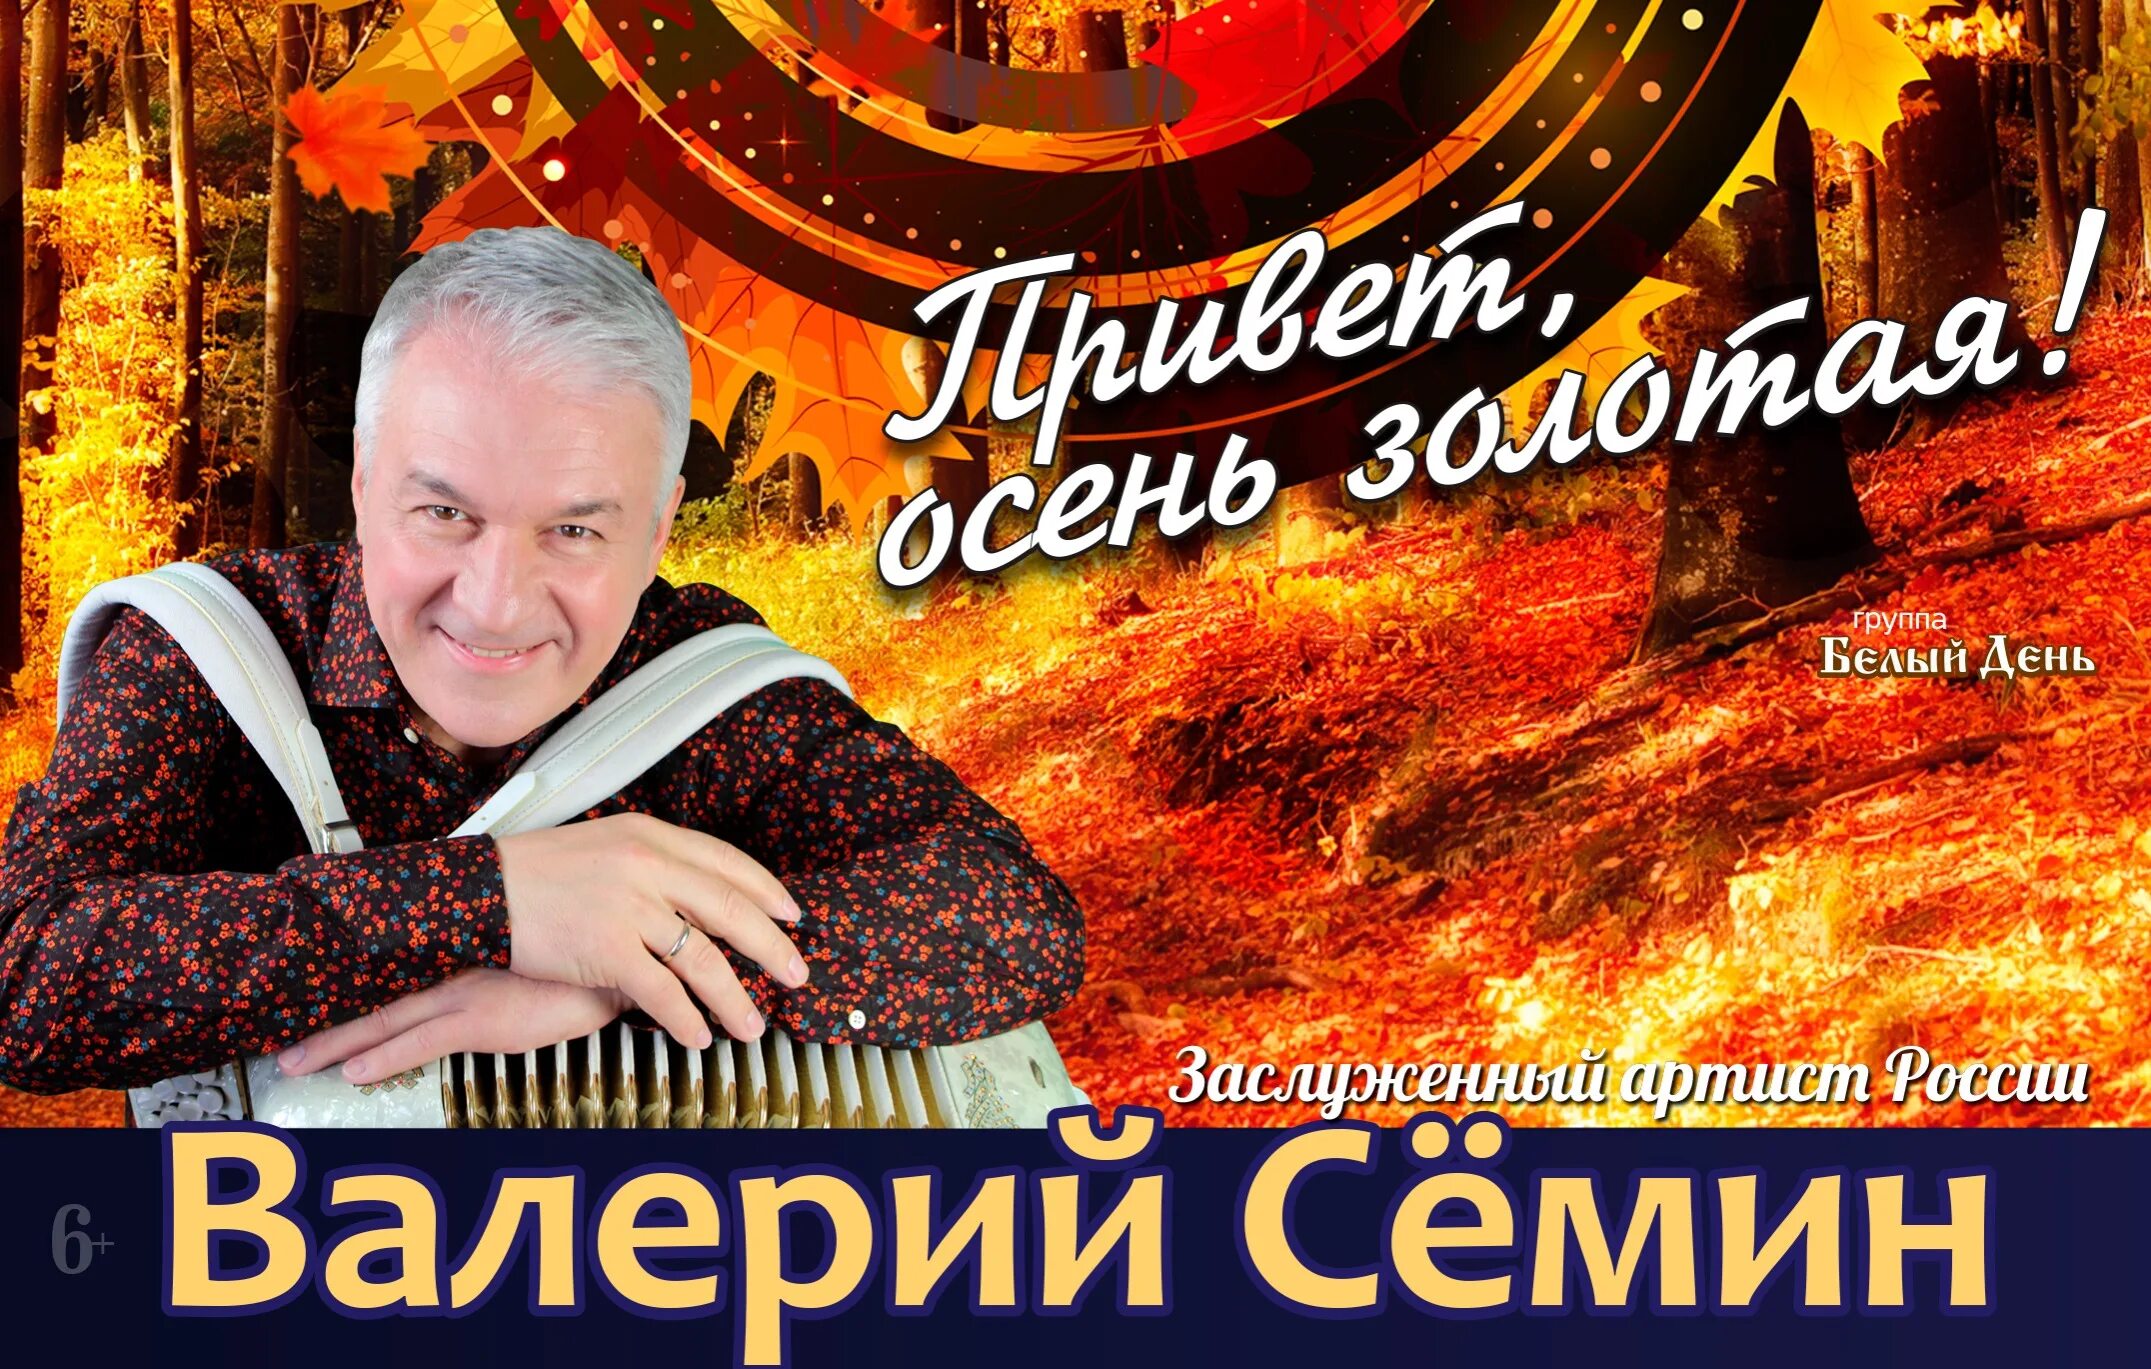 Концерт семина во владимире купить билет. Семин ДК ГАЗ Нижний Новгород. Семин концерт.